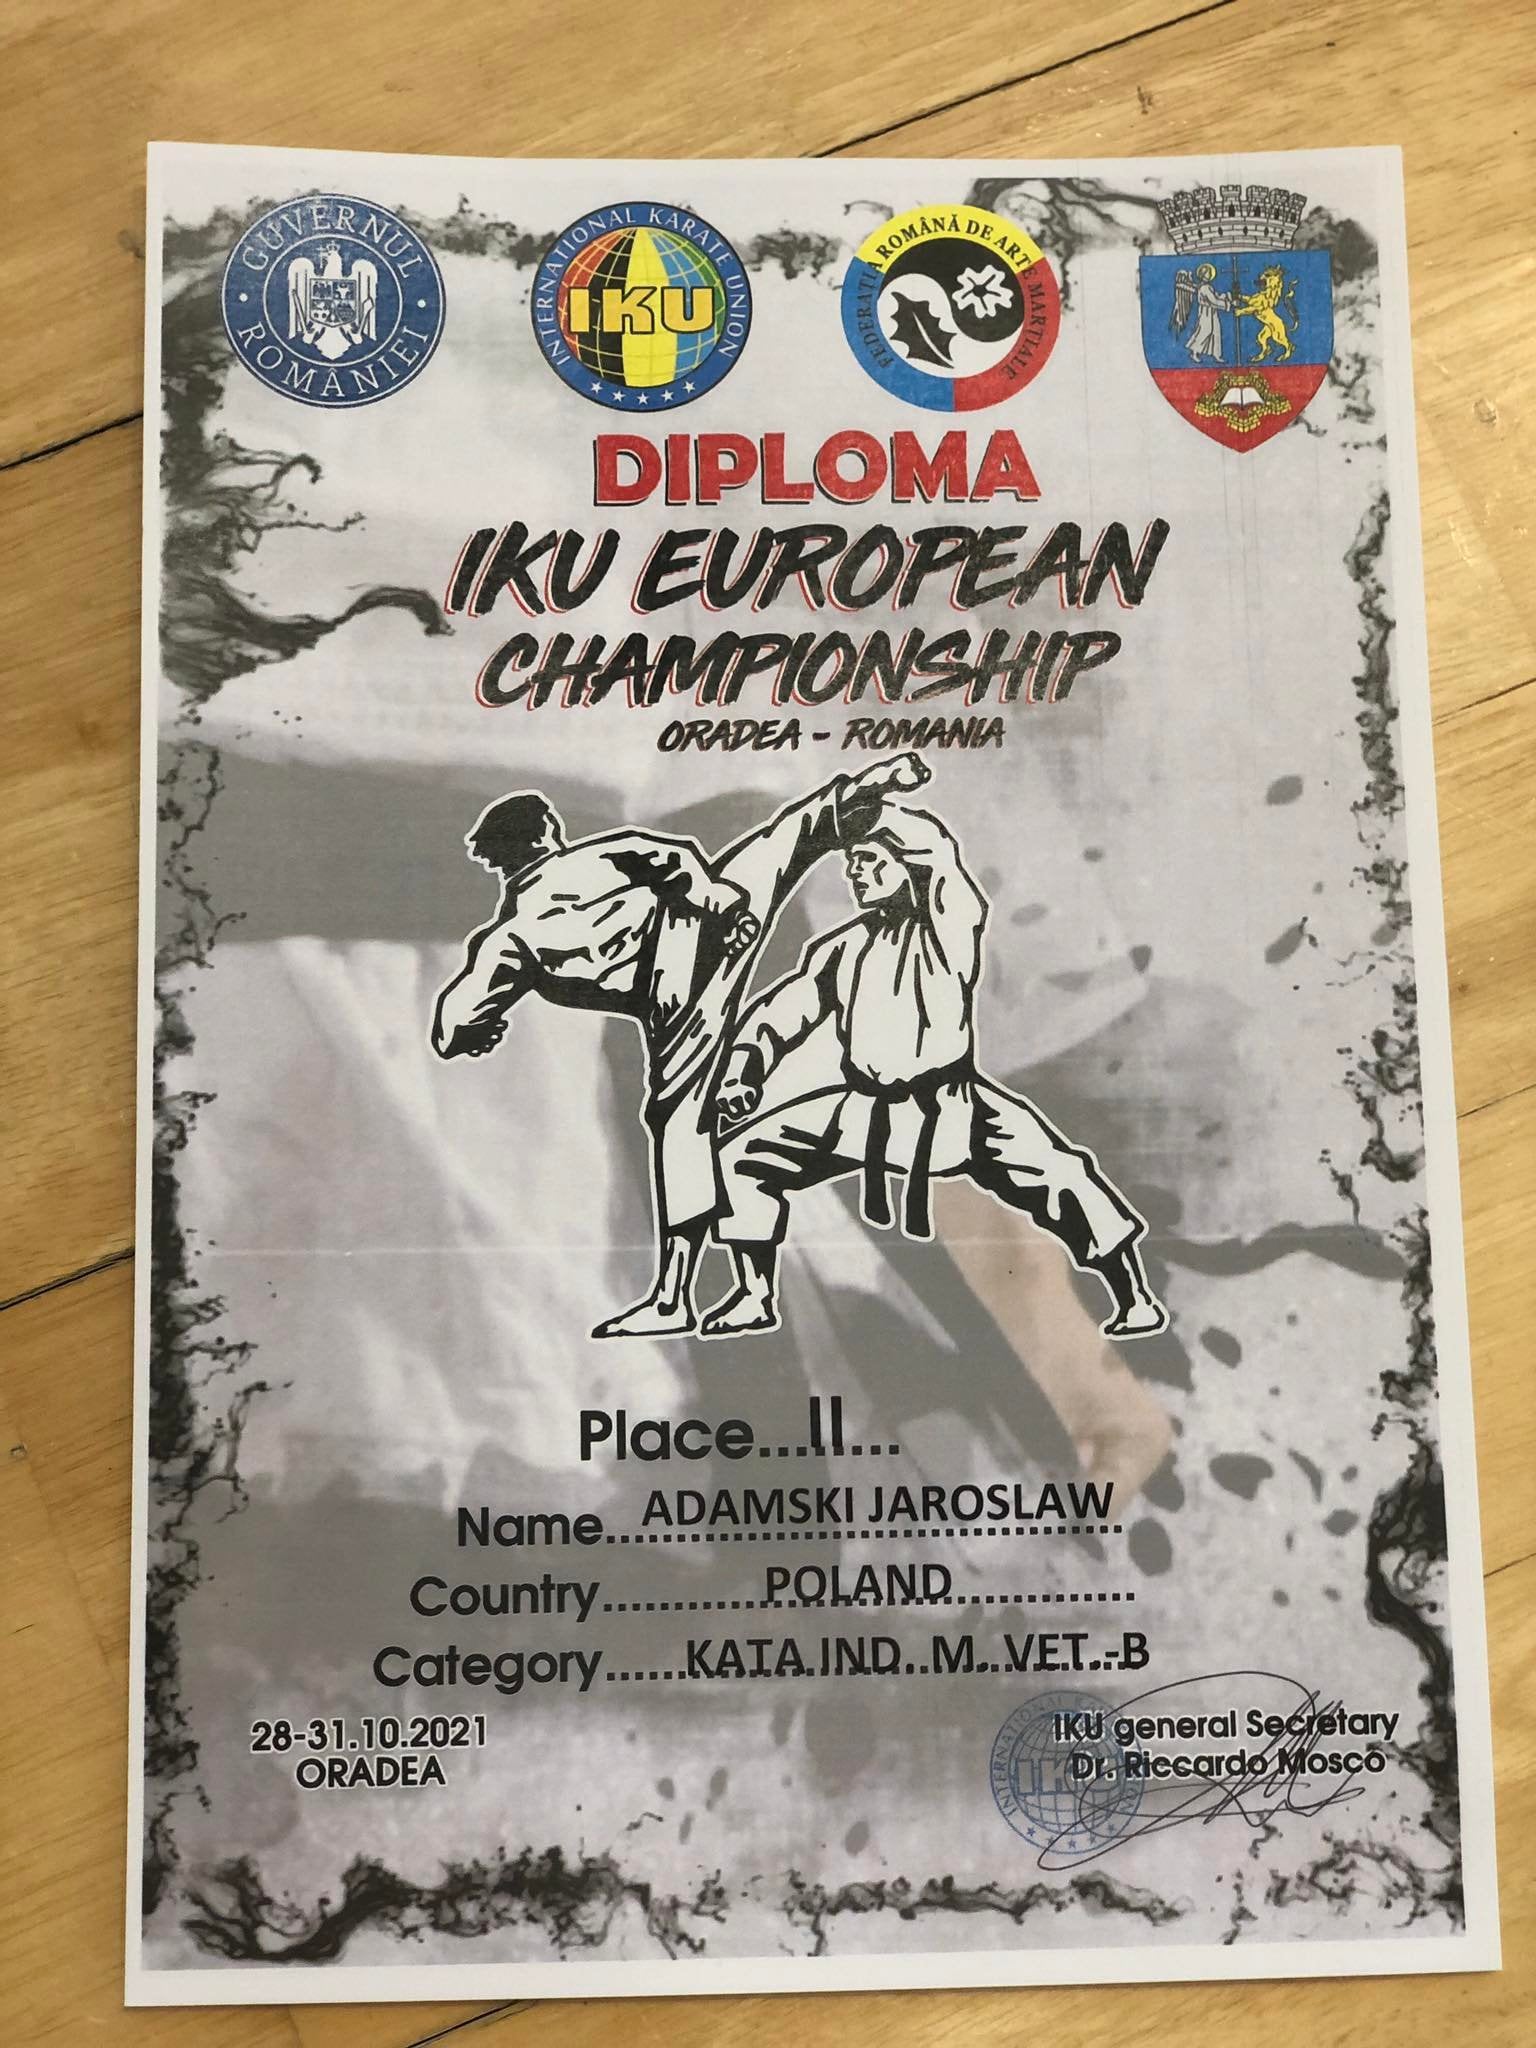 European Championship IKU Oradea 28-31.10.2021